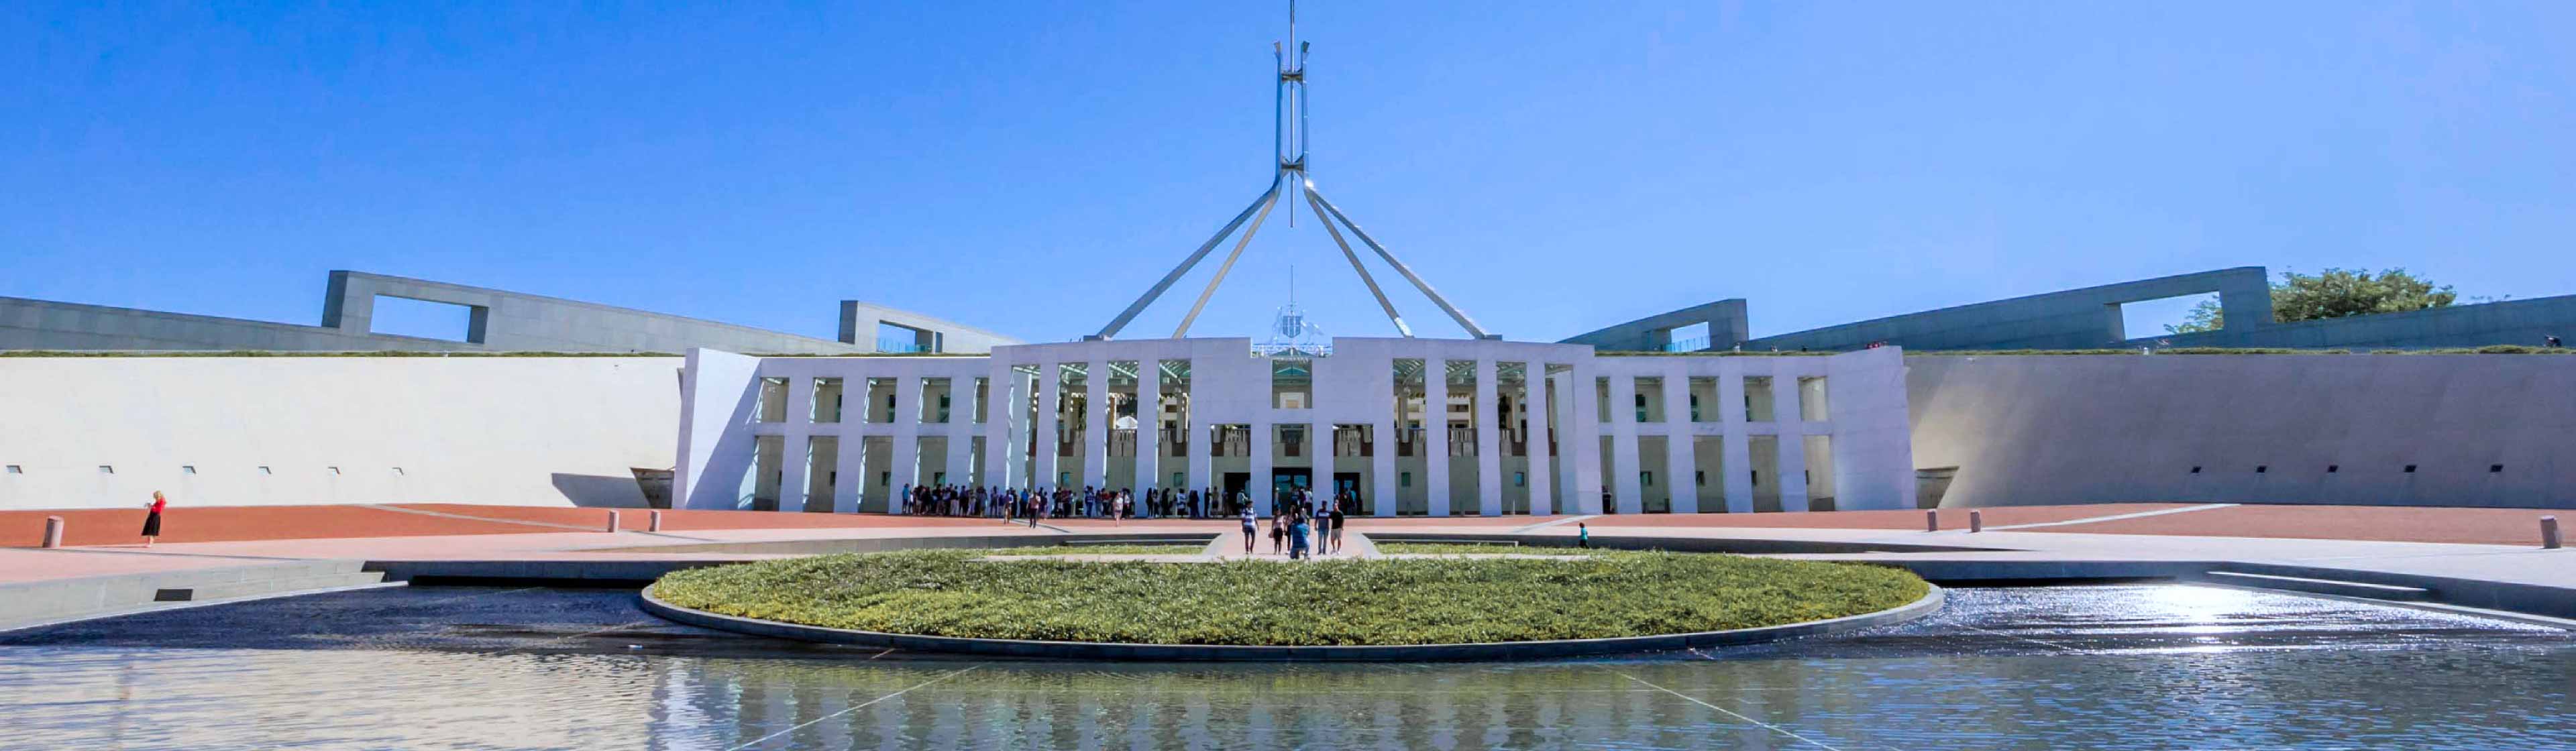 Parliament house in Canberra, Australia